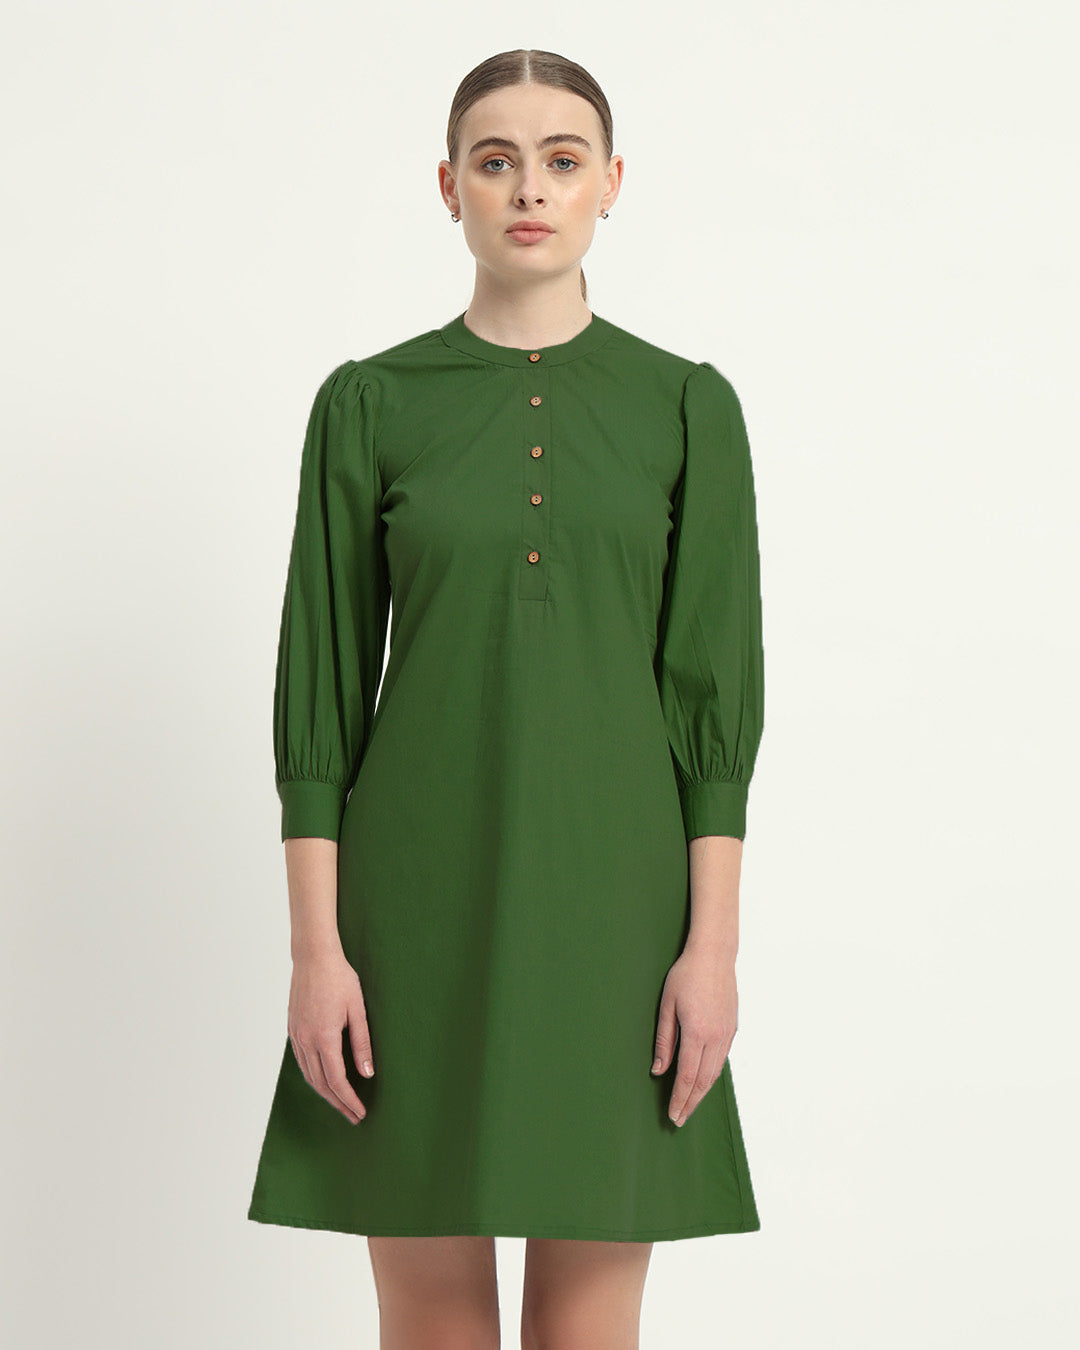 The Emerald Roslyn Cotton Dress